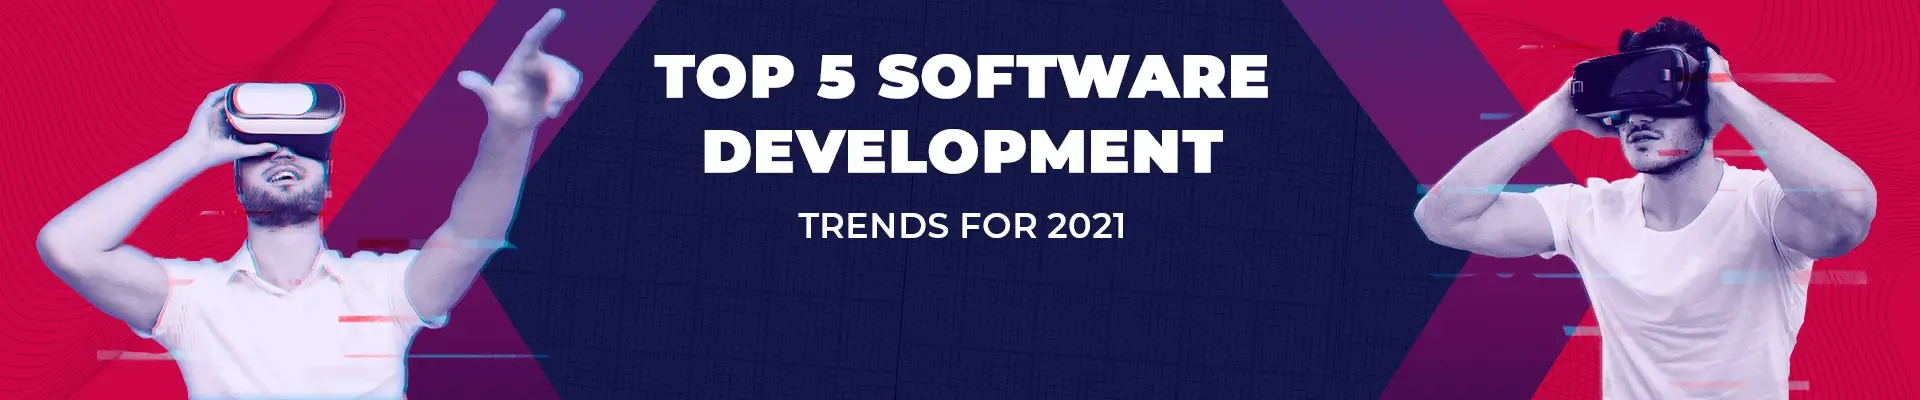 Top 5 Software Development Trends for 2021